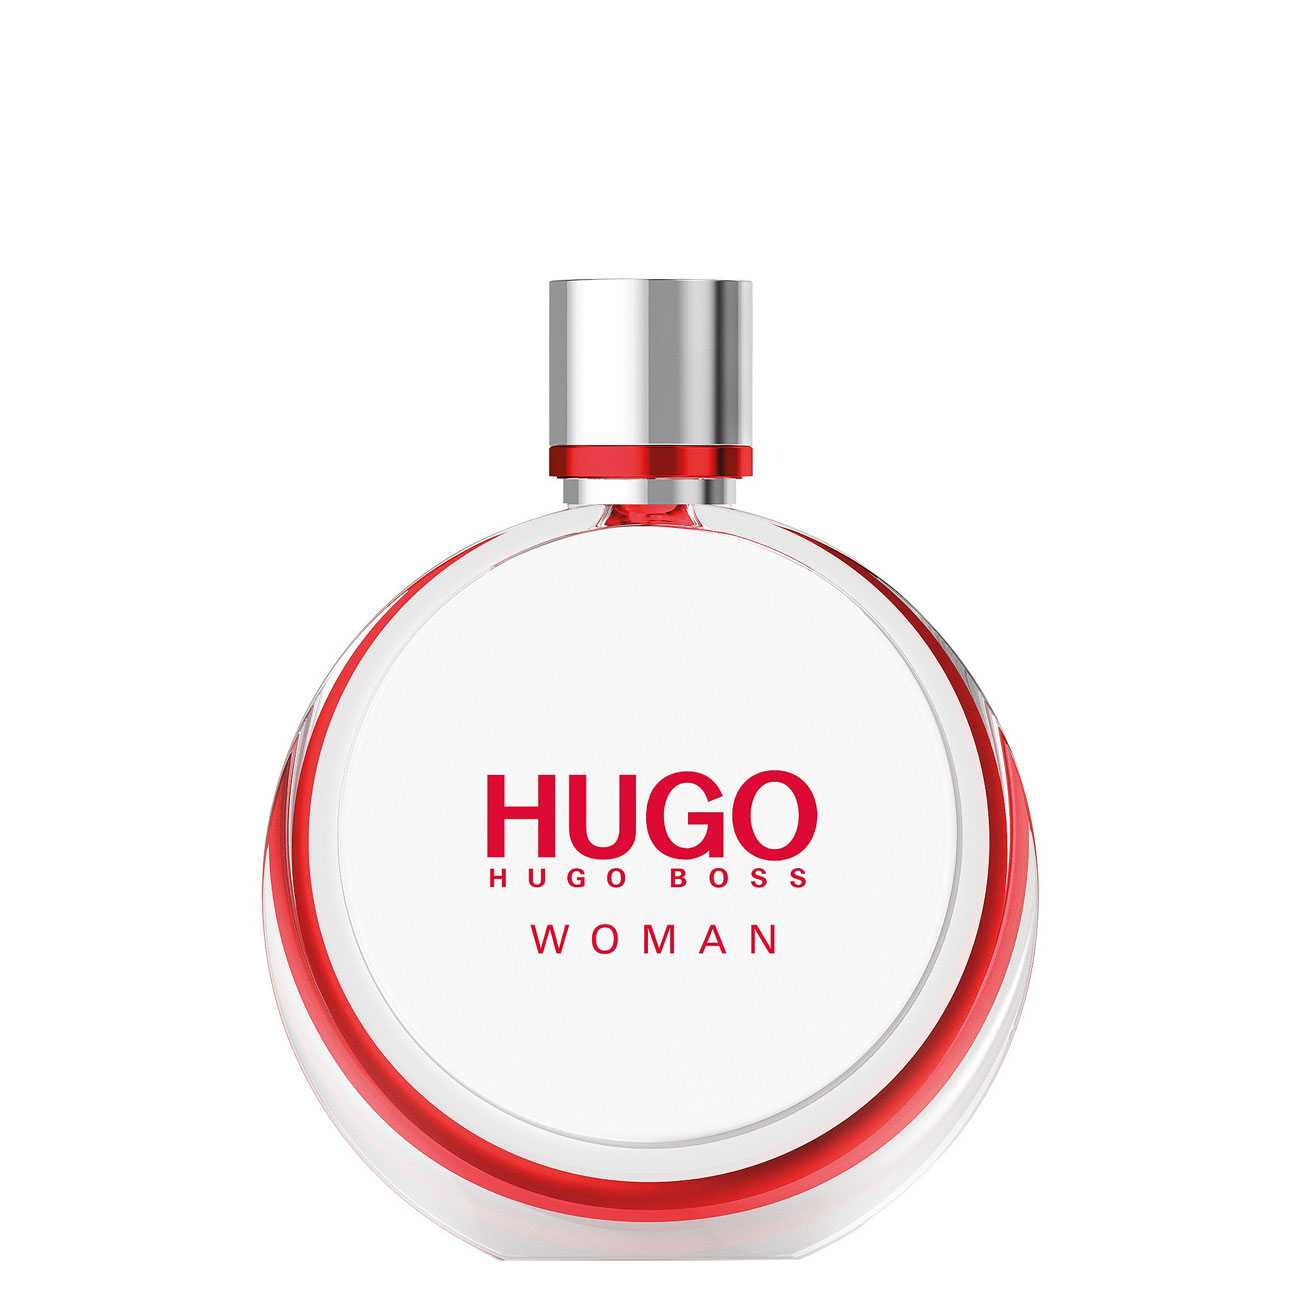 Apa de Parfum Hugo Boss WOMAN 75ml cu comanda online